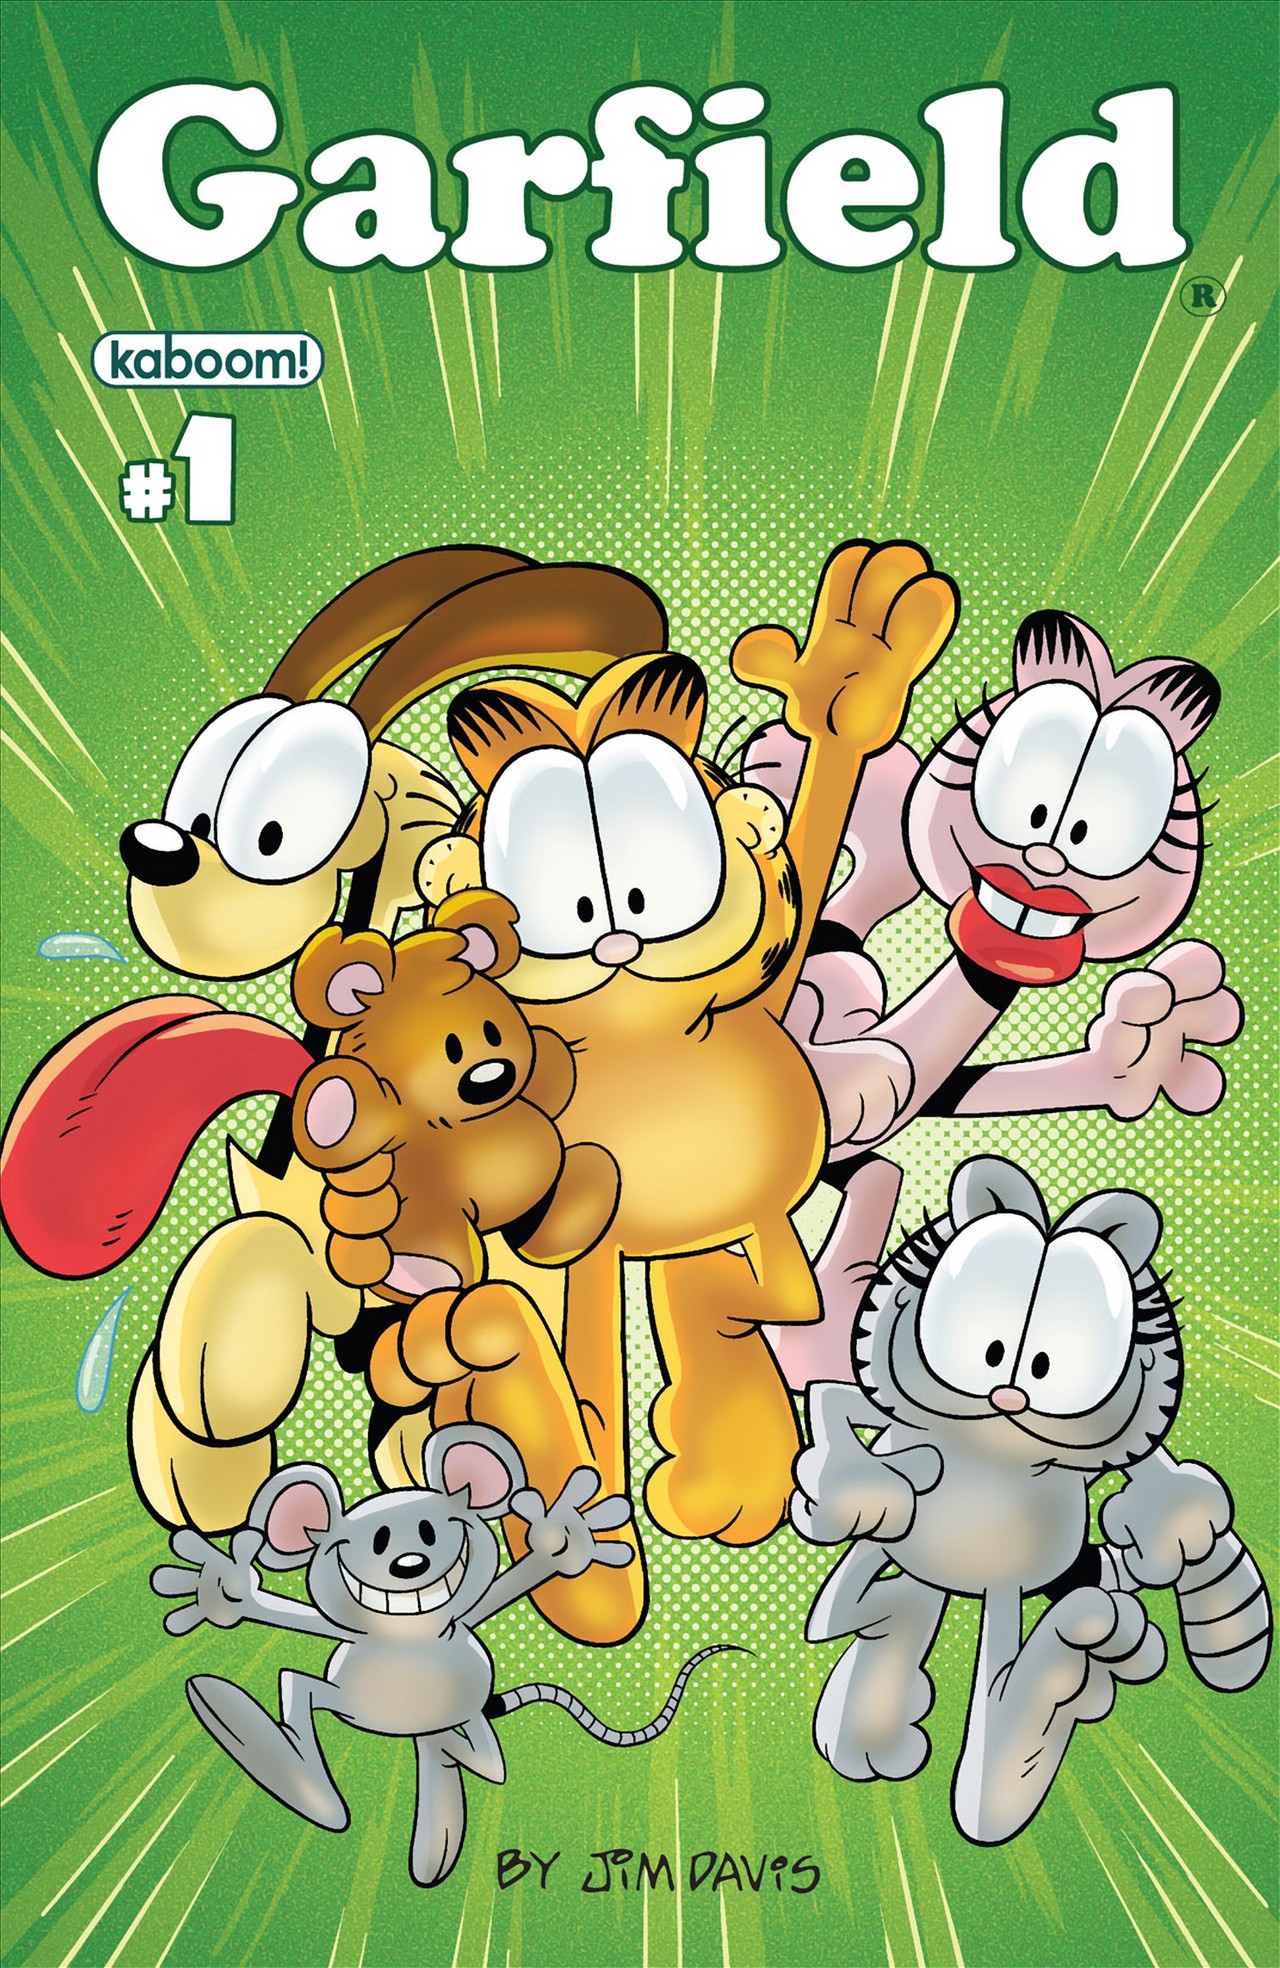 Read online Garfield comic -  Issue #1 - 1